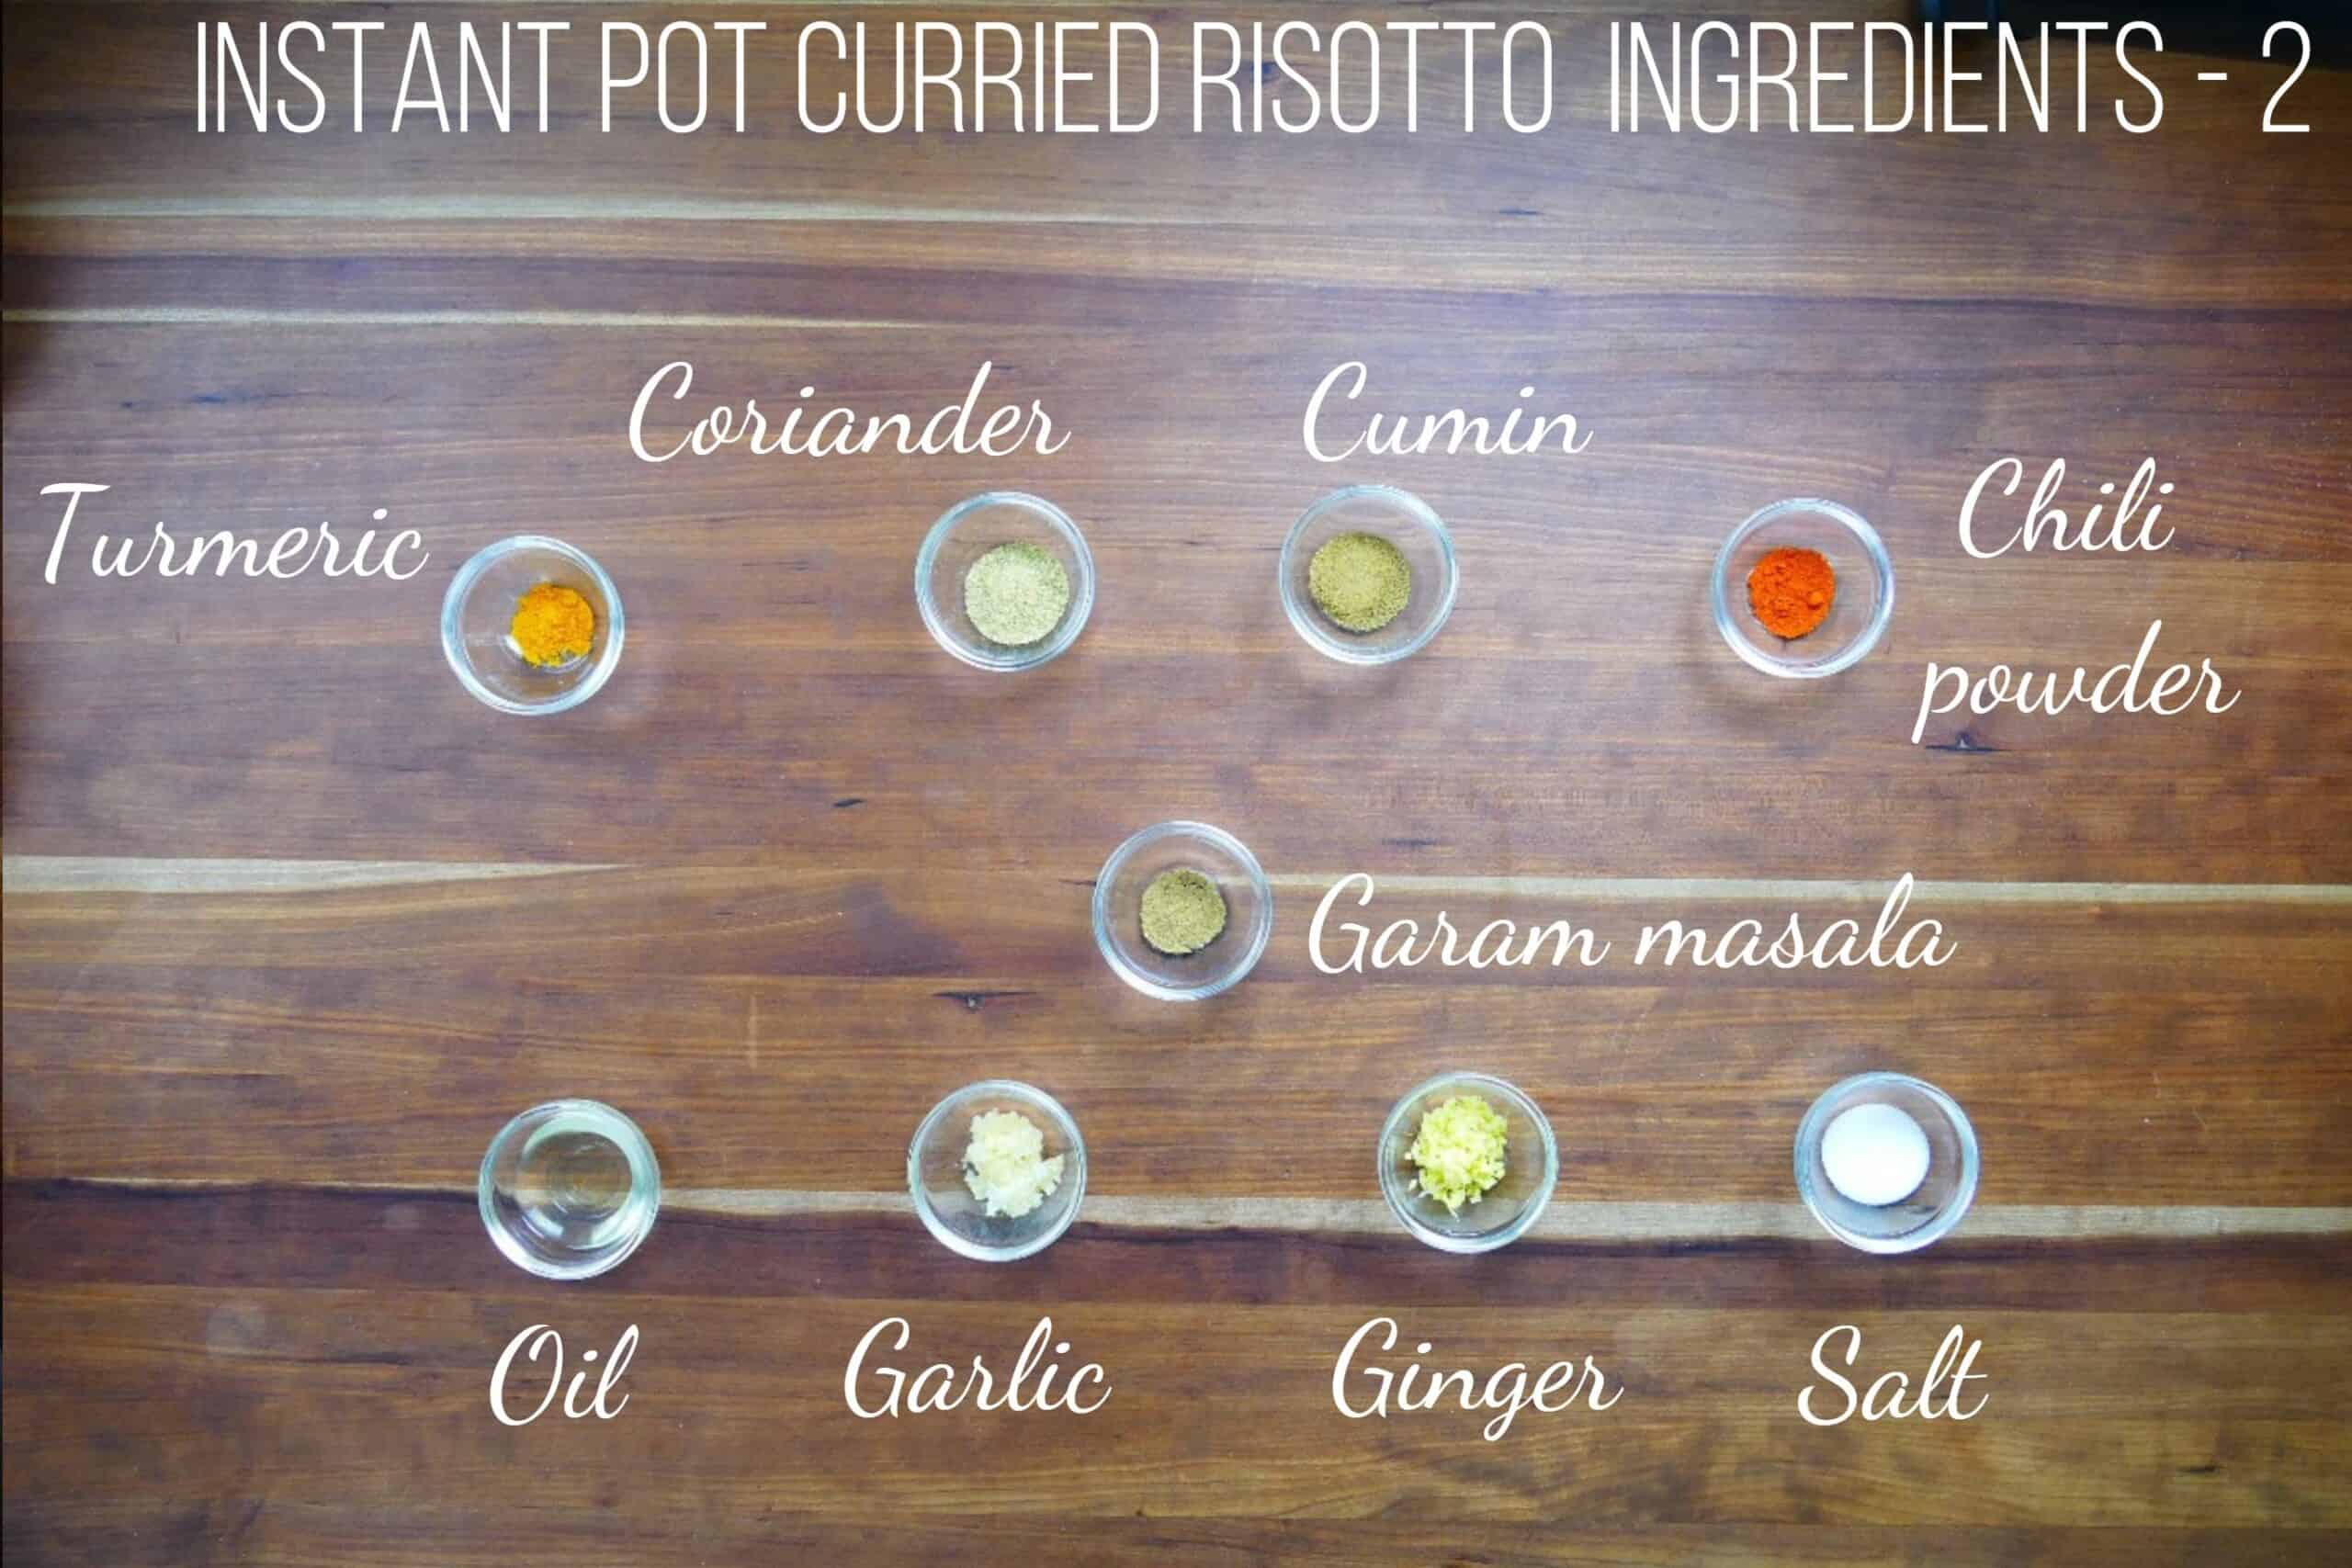 Instant Pot Curried Risotto Ingredients turmeric, coriander, cumin, chili powder, garam masala, oil, garlic, ginger, salt